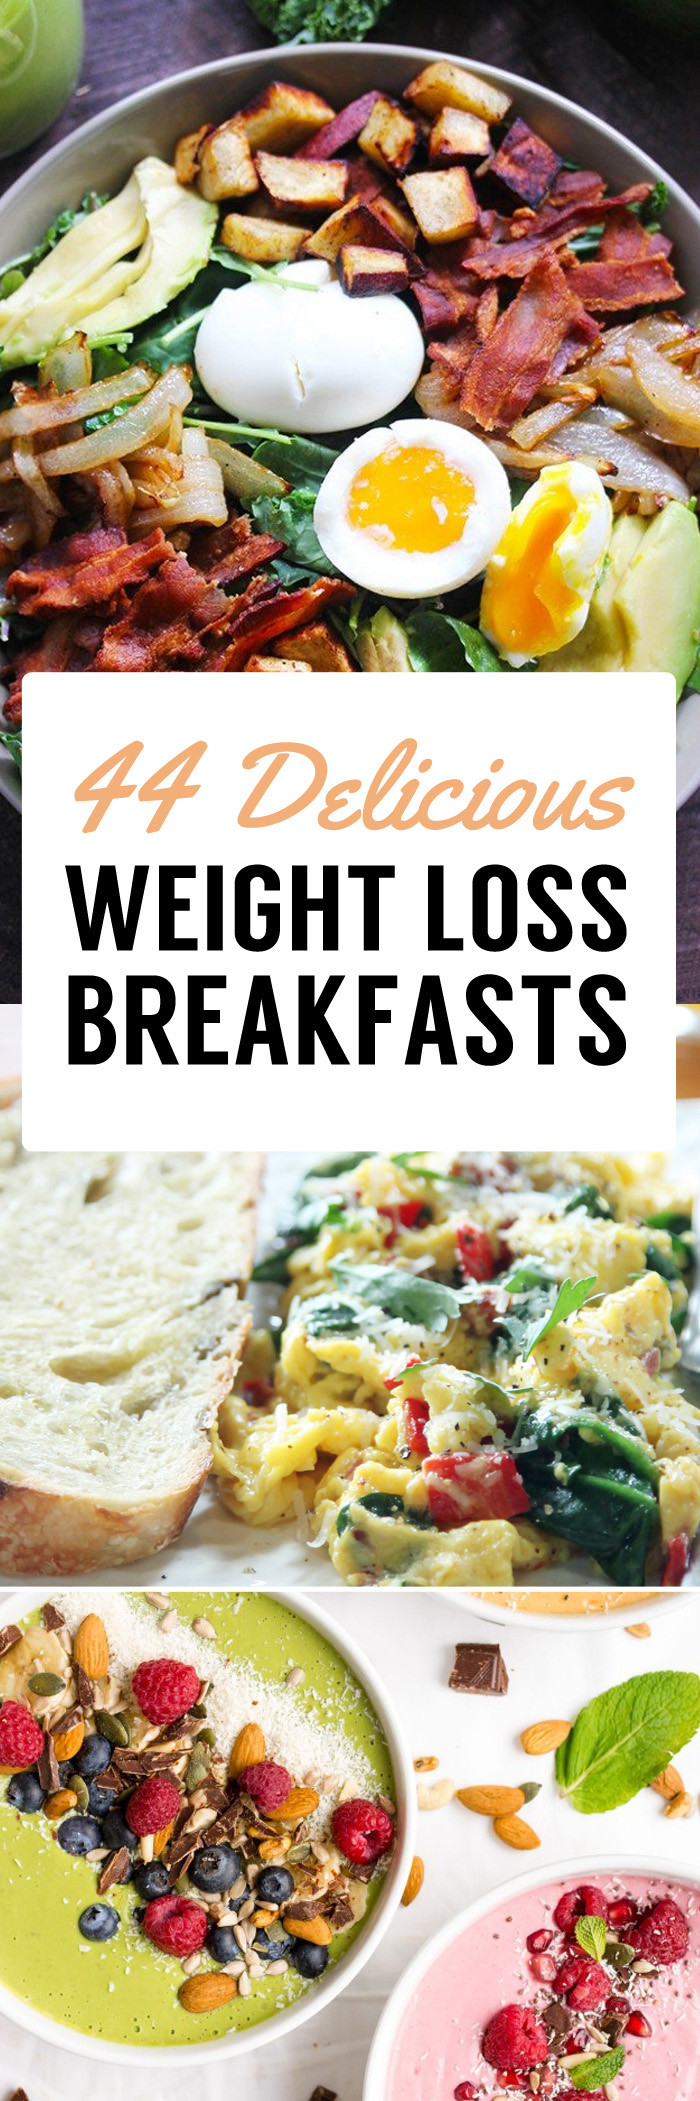 Fat Burning Foods Breakfast
 44 Weight Loss Breakfast Recipes To Jumpstart Your Fat